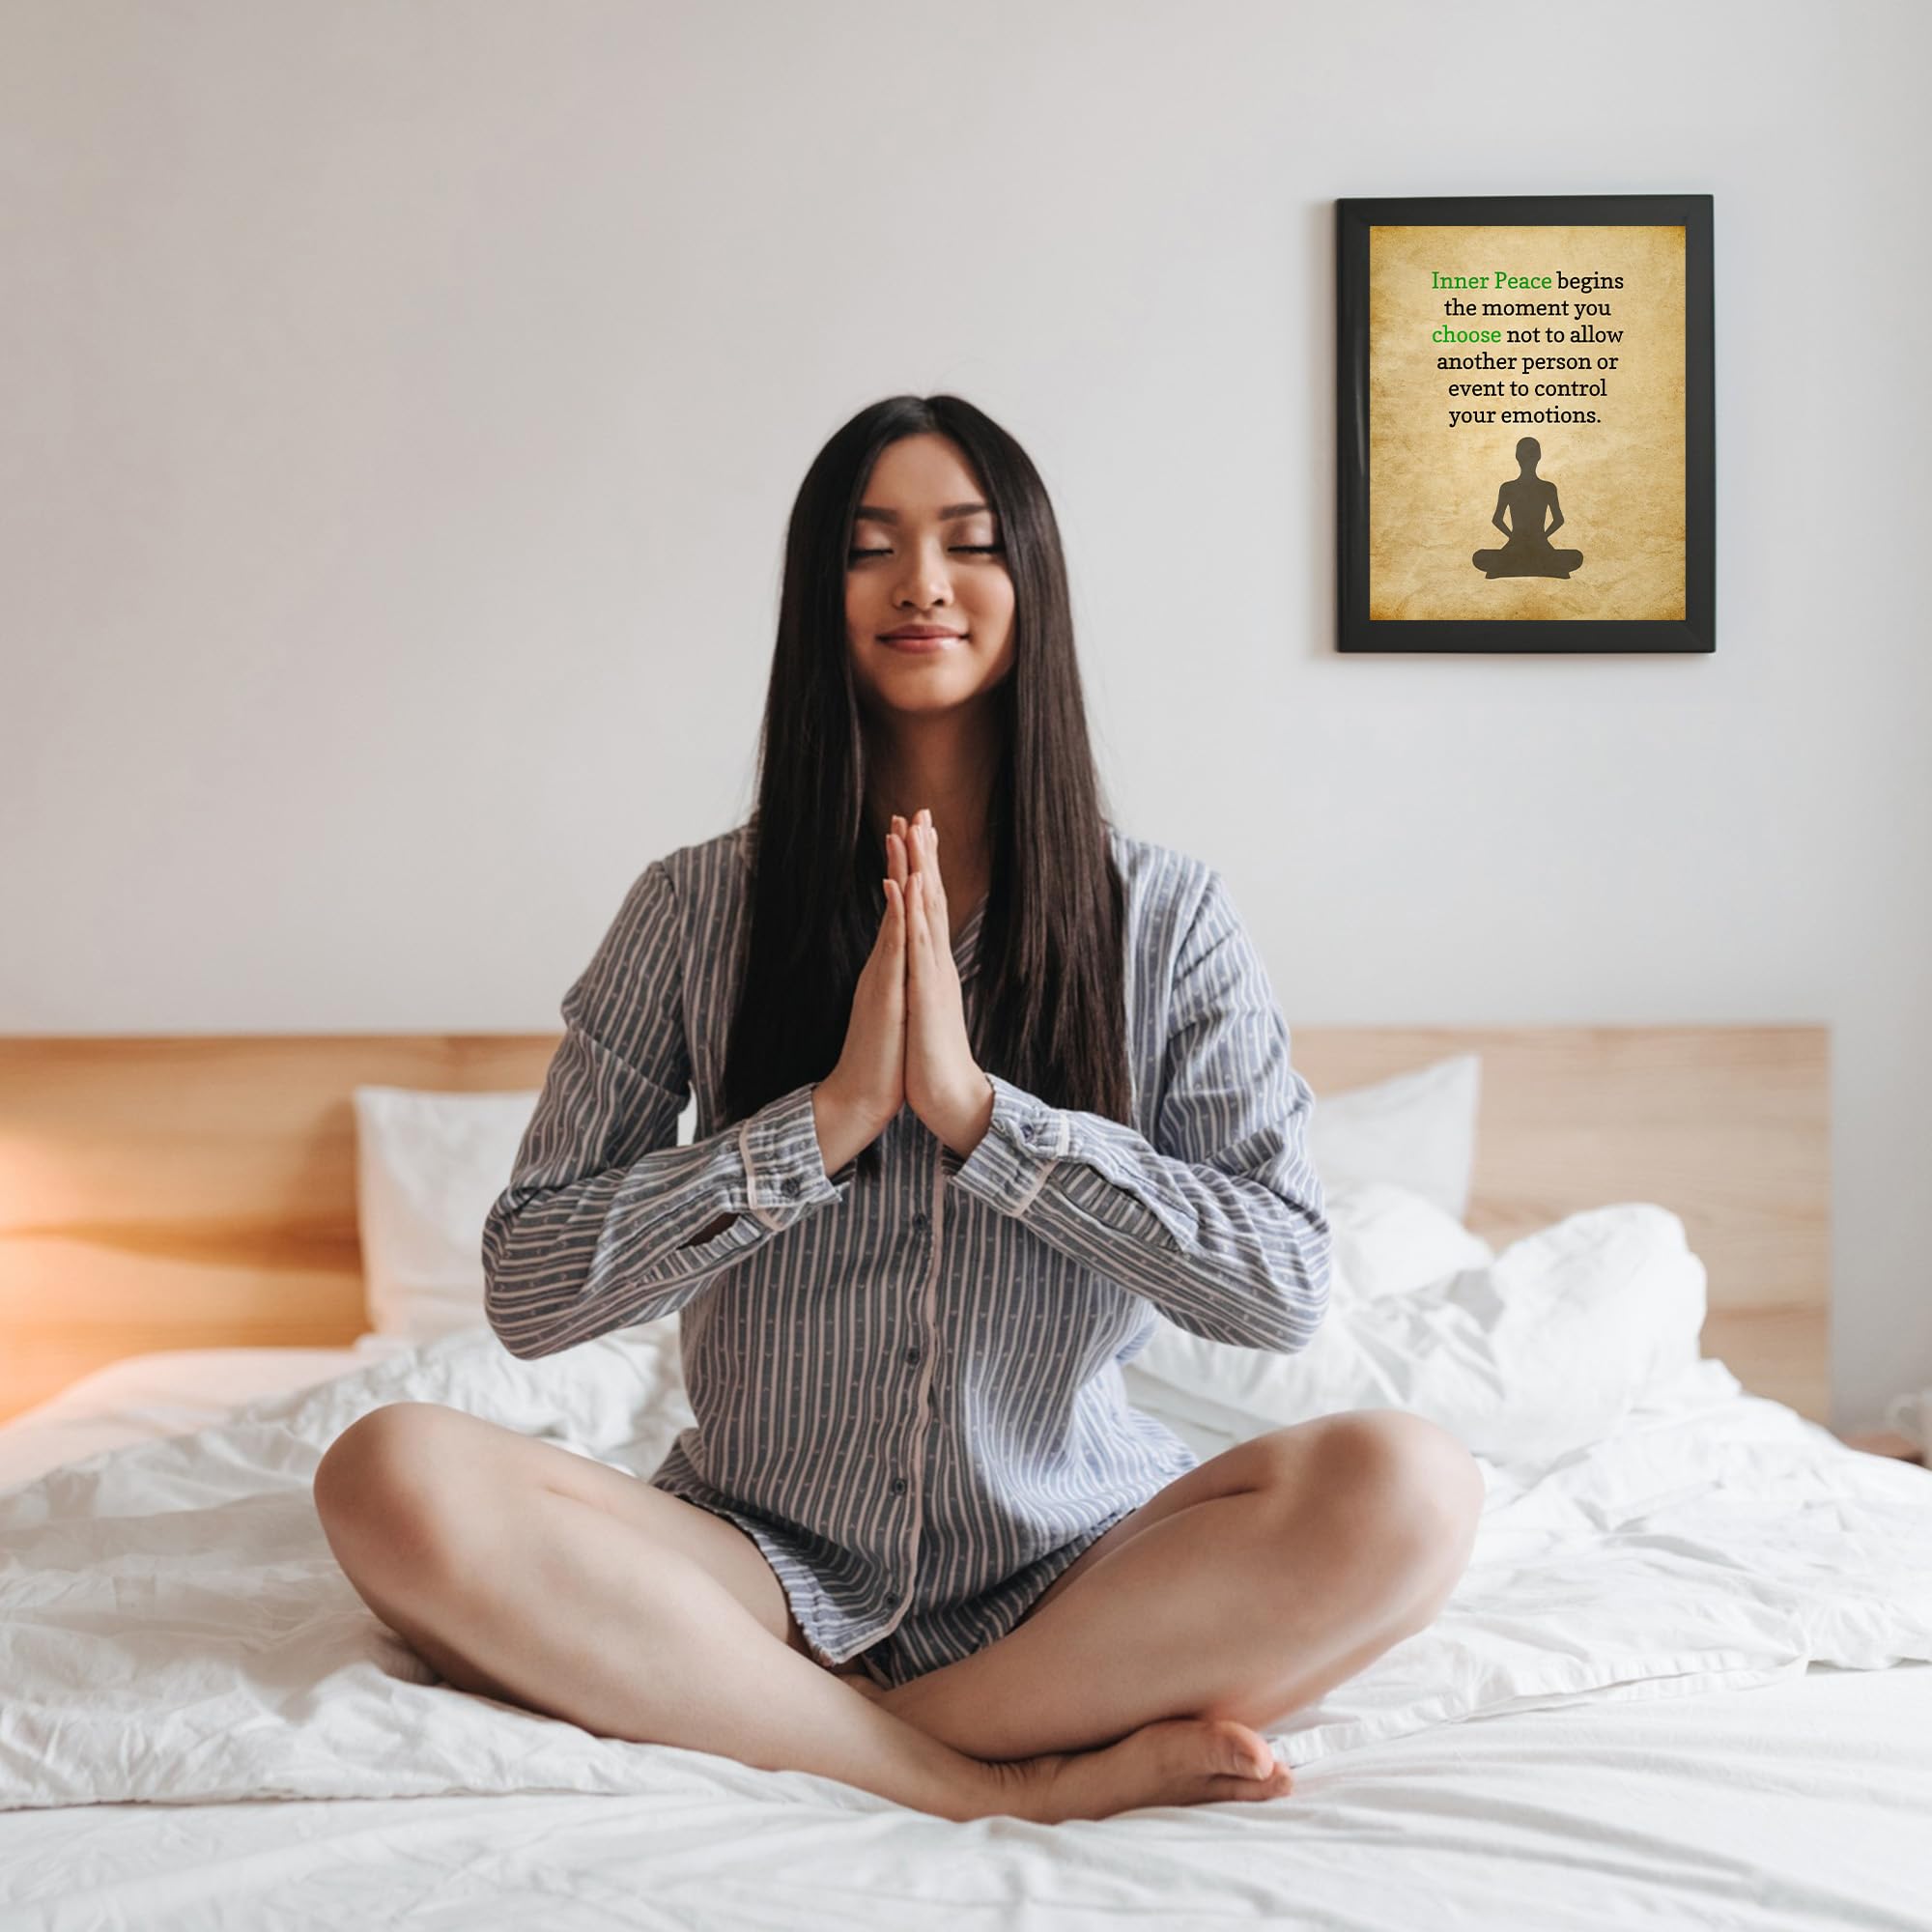 Inner Peace Begins - Spiritual Yoga Inspirational Wall Art, Meditation Parchment Paper Motivational Wall Decor Print For Living Room Decor, Home Decor, Office Decor, or Bedroom Decor, Unframed - 8x10